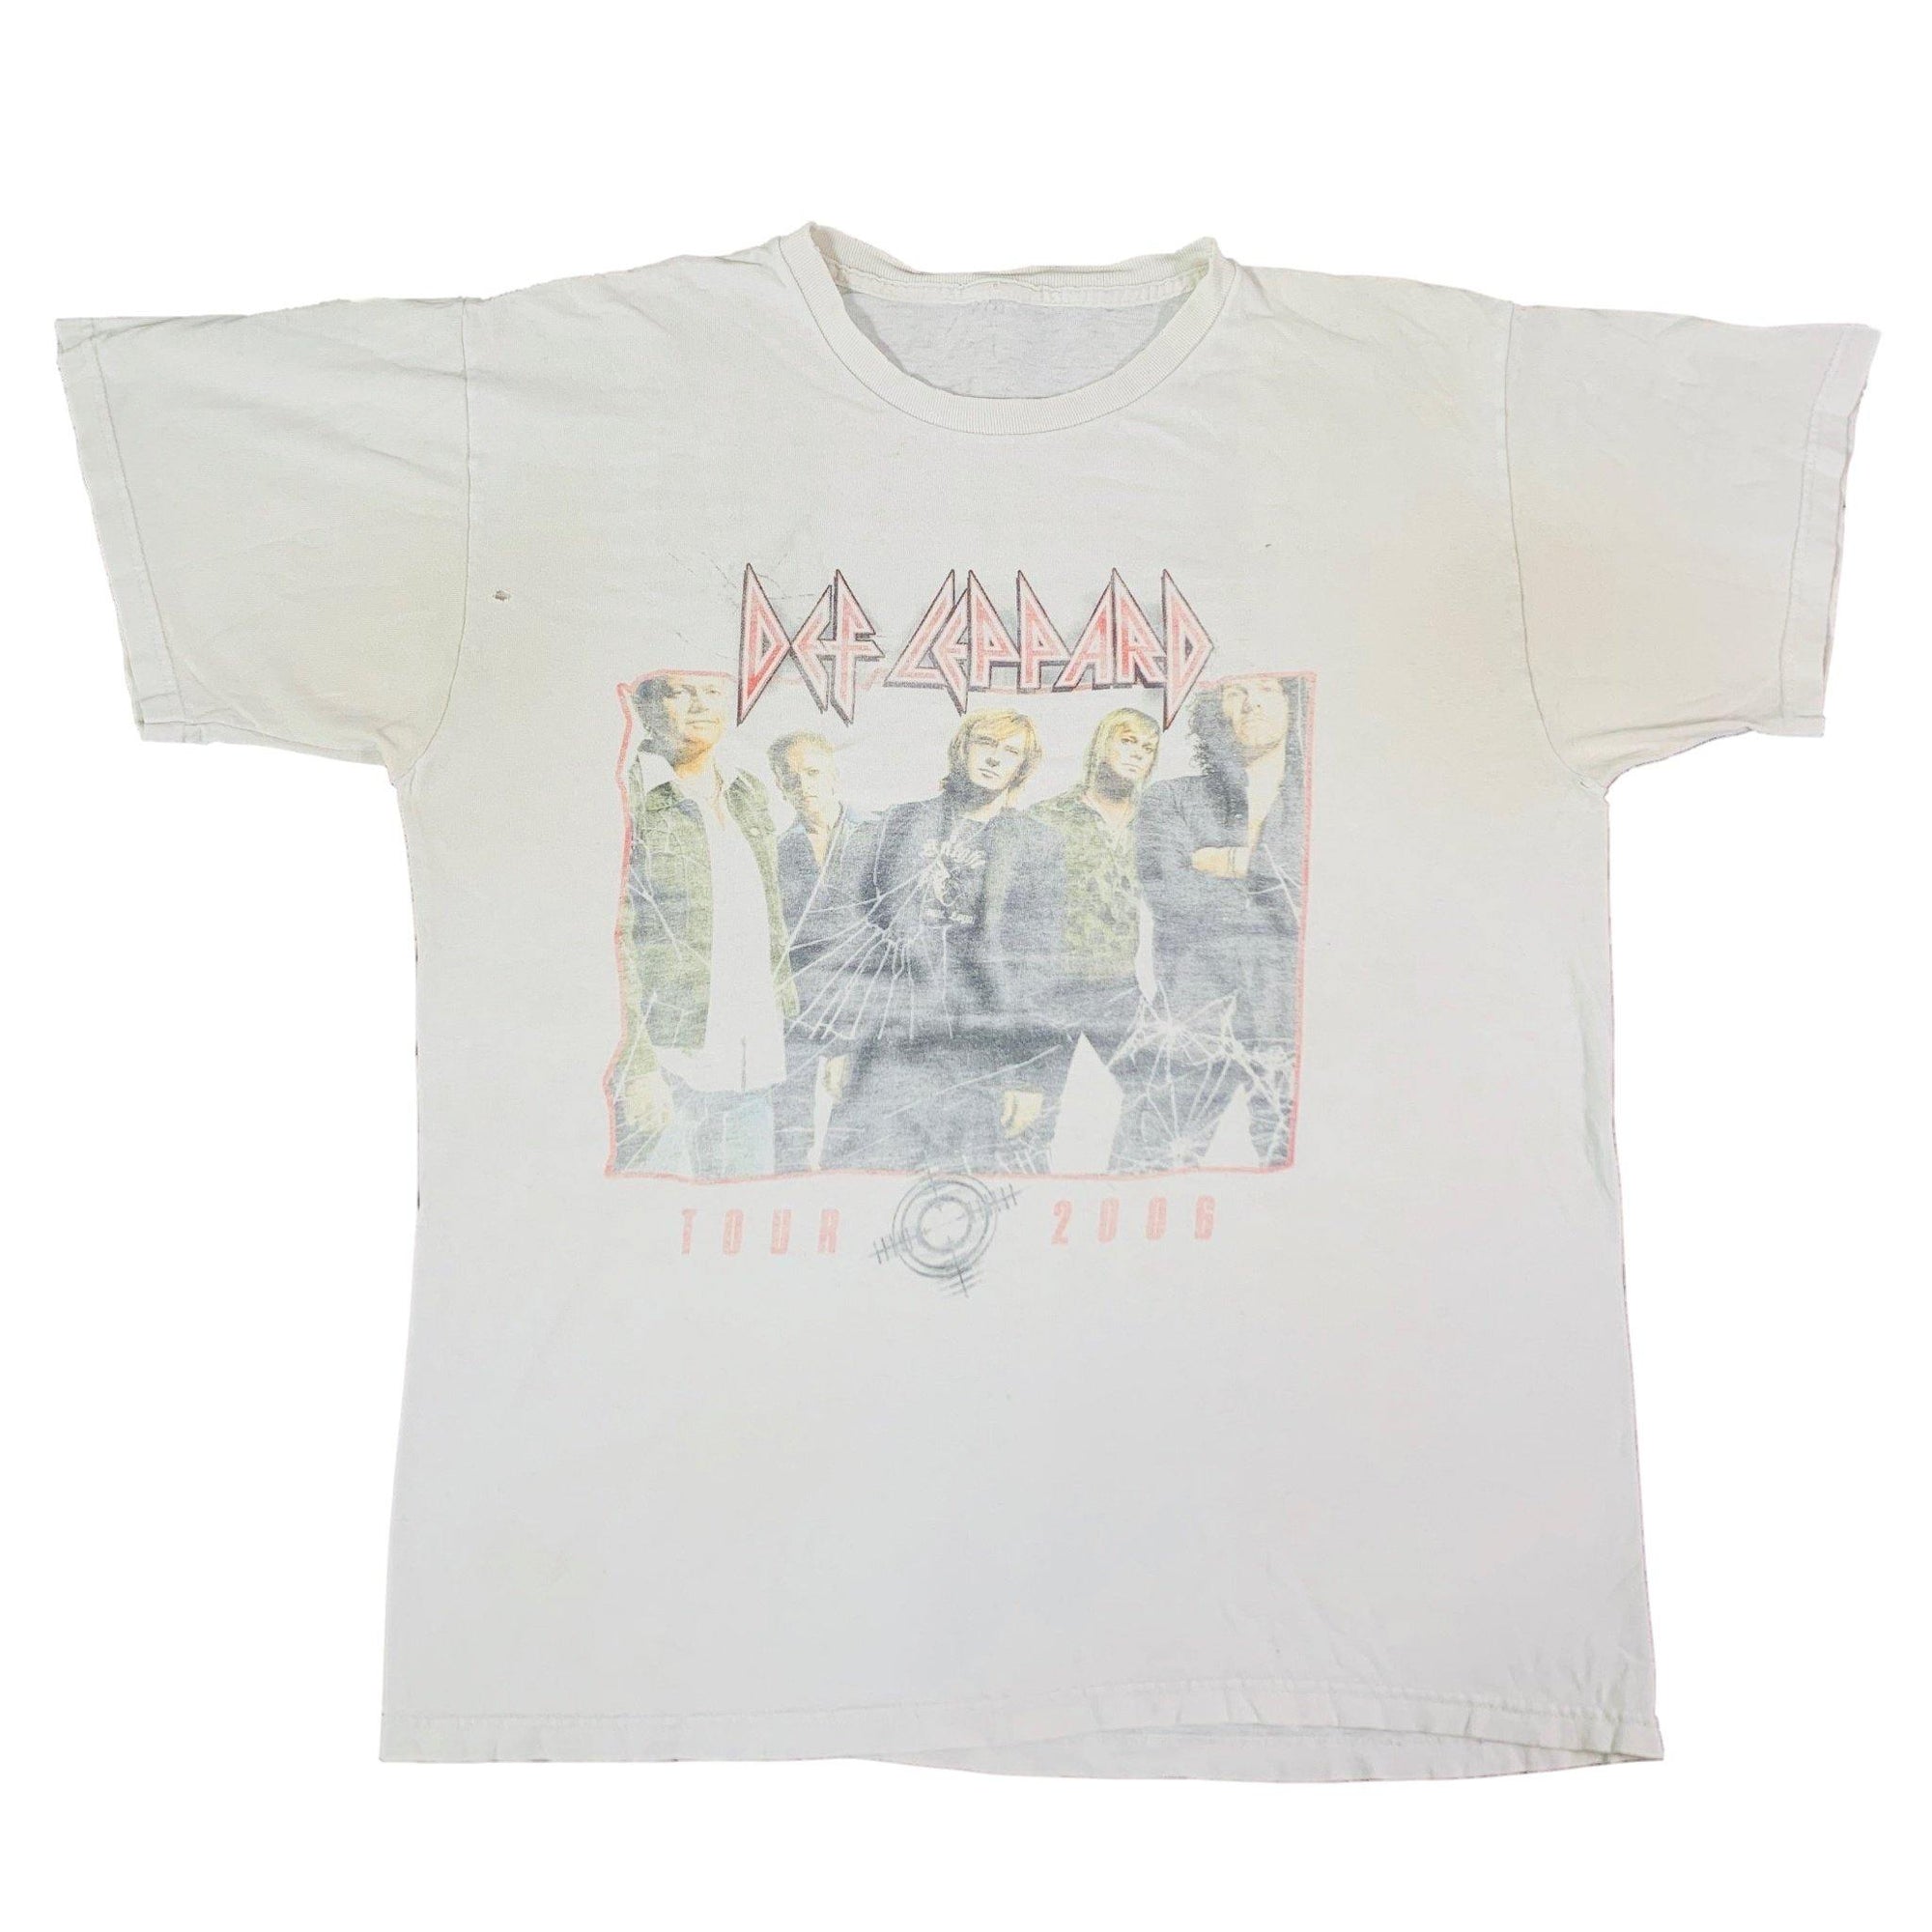 Vintage Def Leppard "Tour 06'" T-Shirt - jointcustodydc